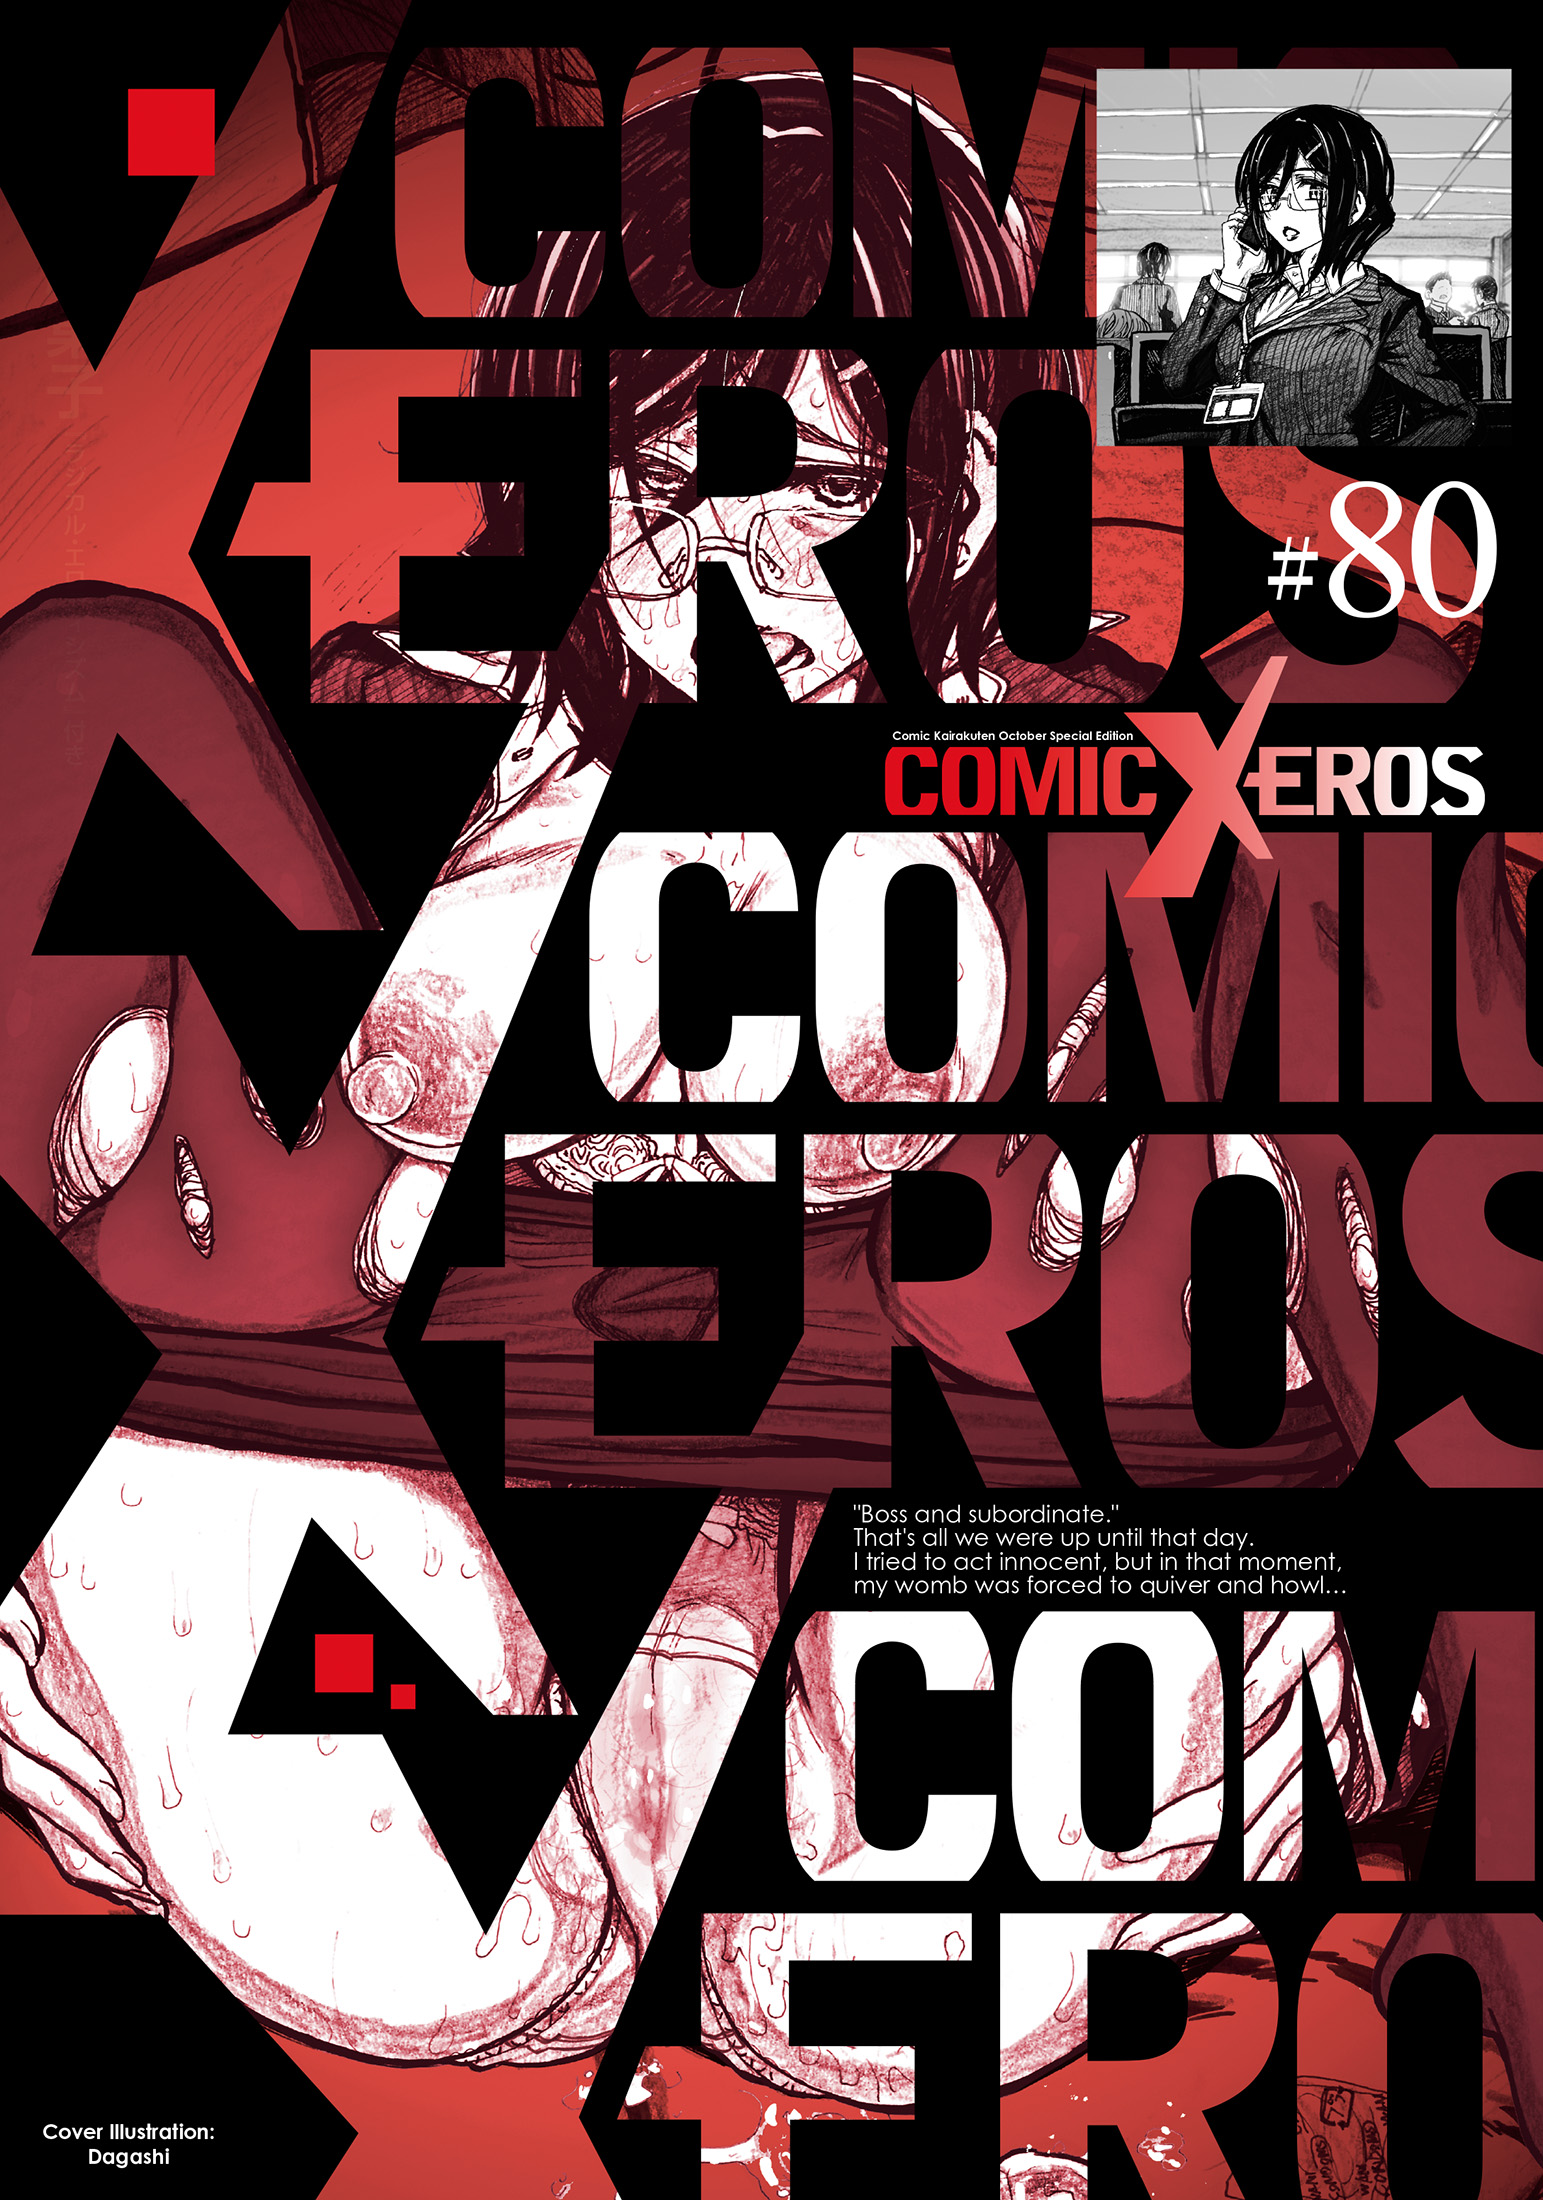 Forum Image: https://t.fakku.net/images/upload/Comic-X-Eros-80.jpg